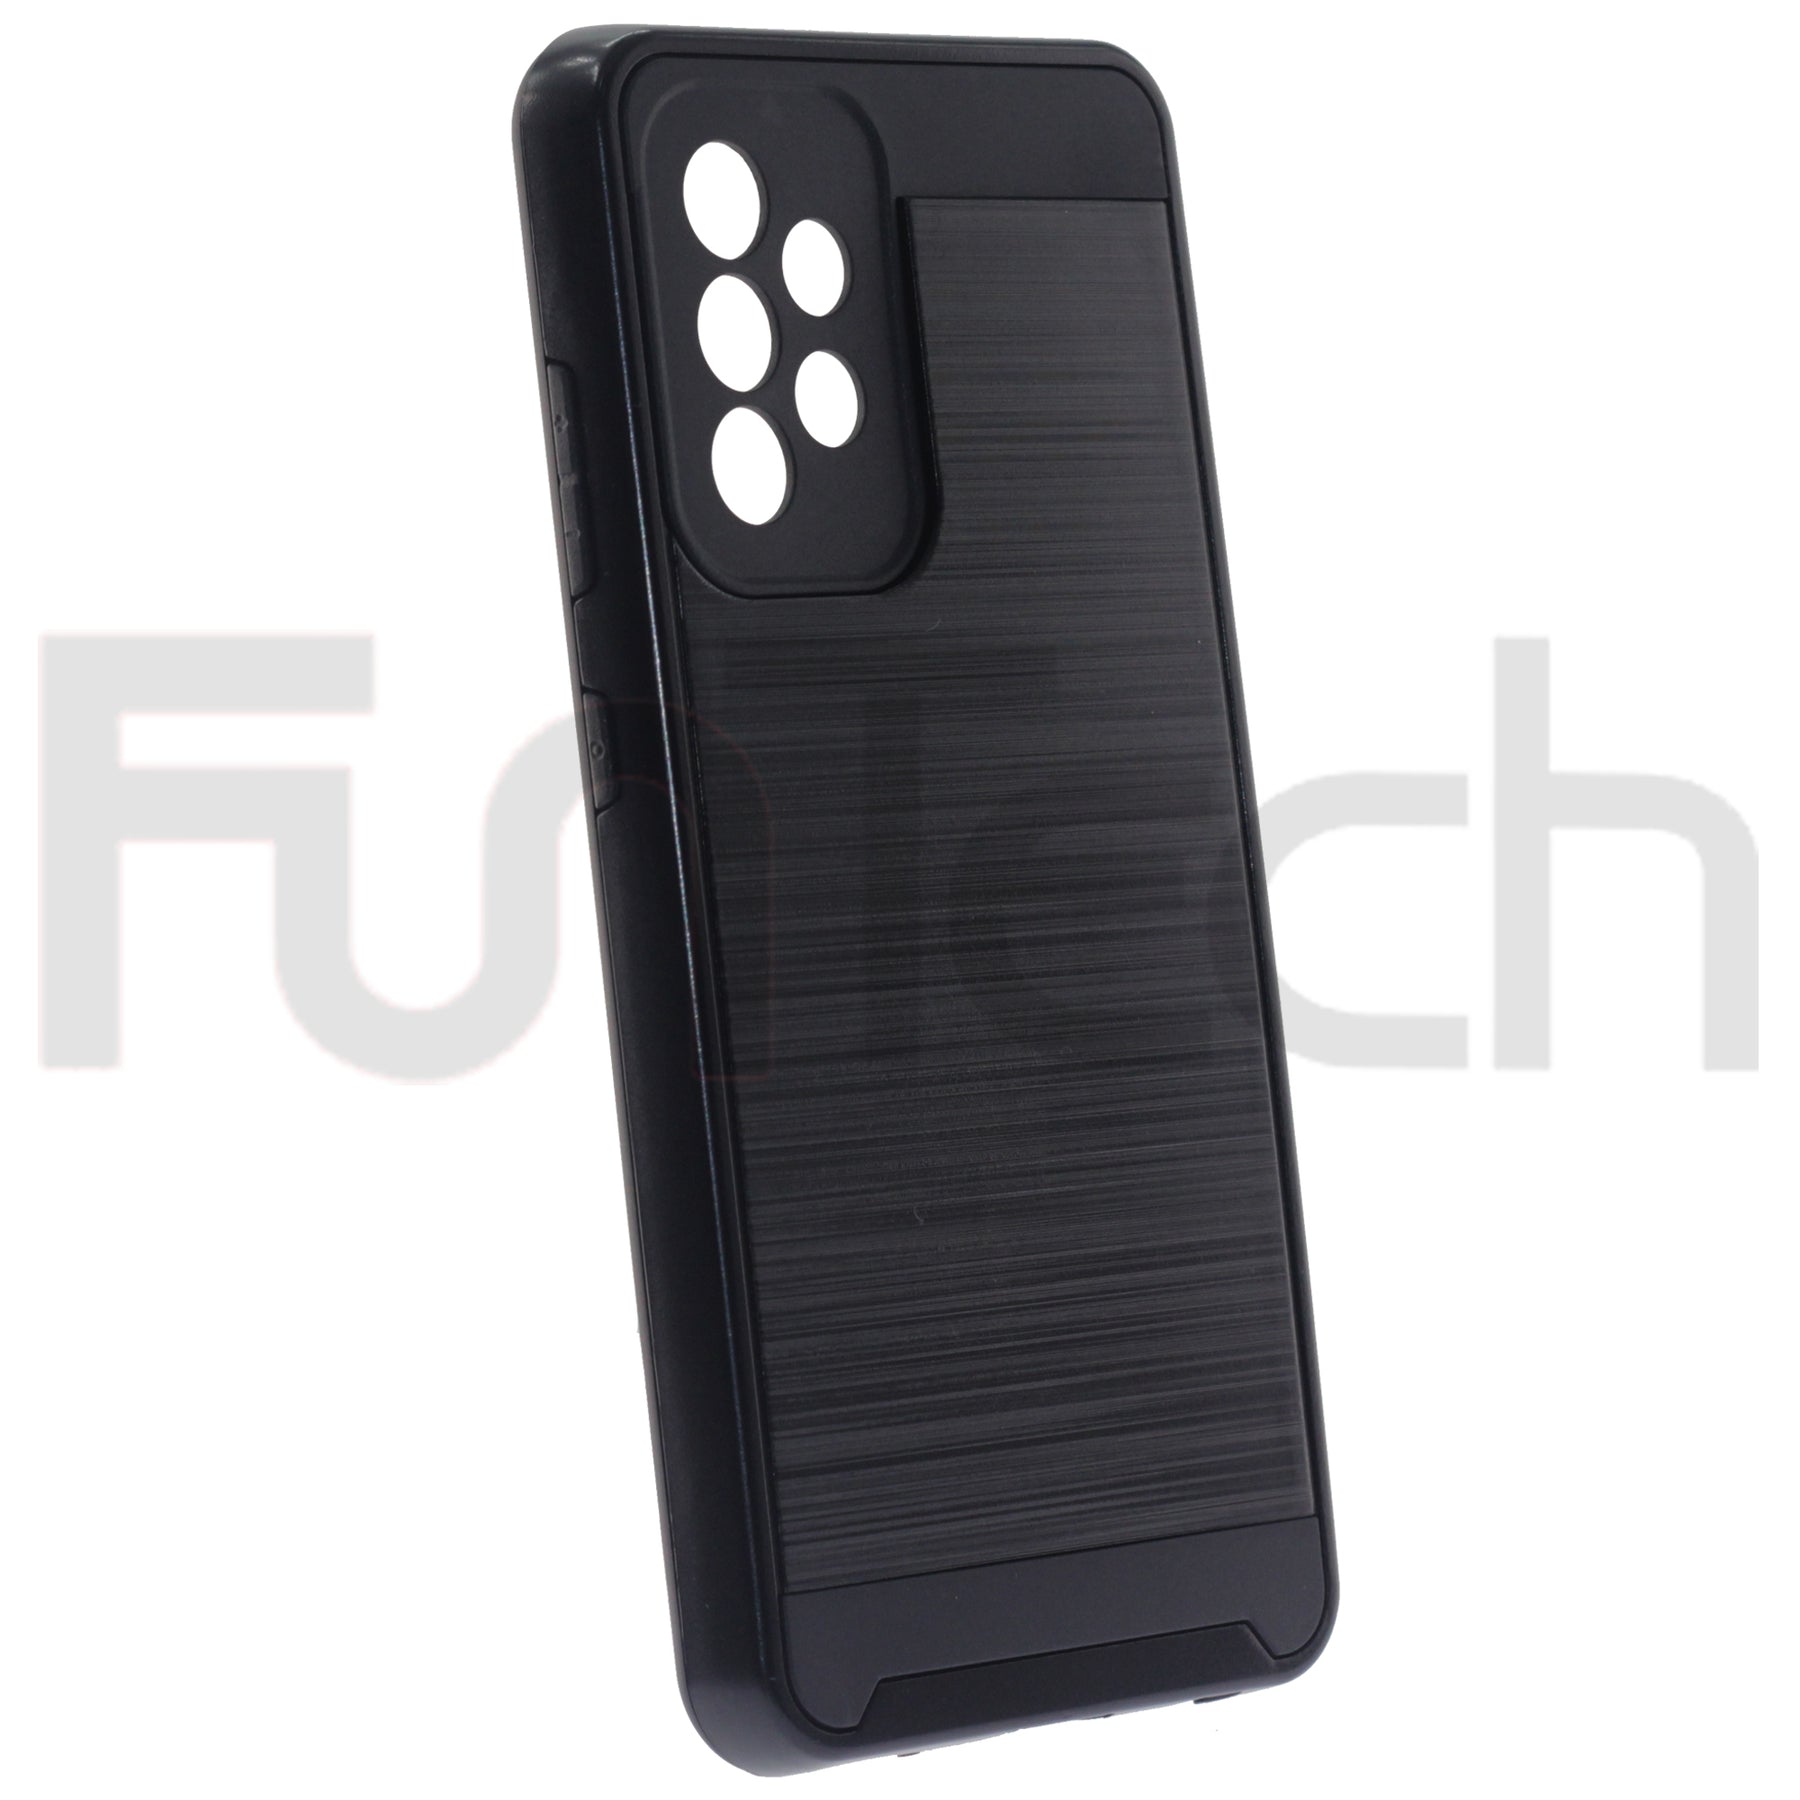 Samsung A52 (5G), Slim Armor Case, Color Black.